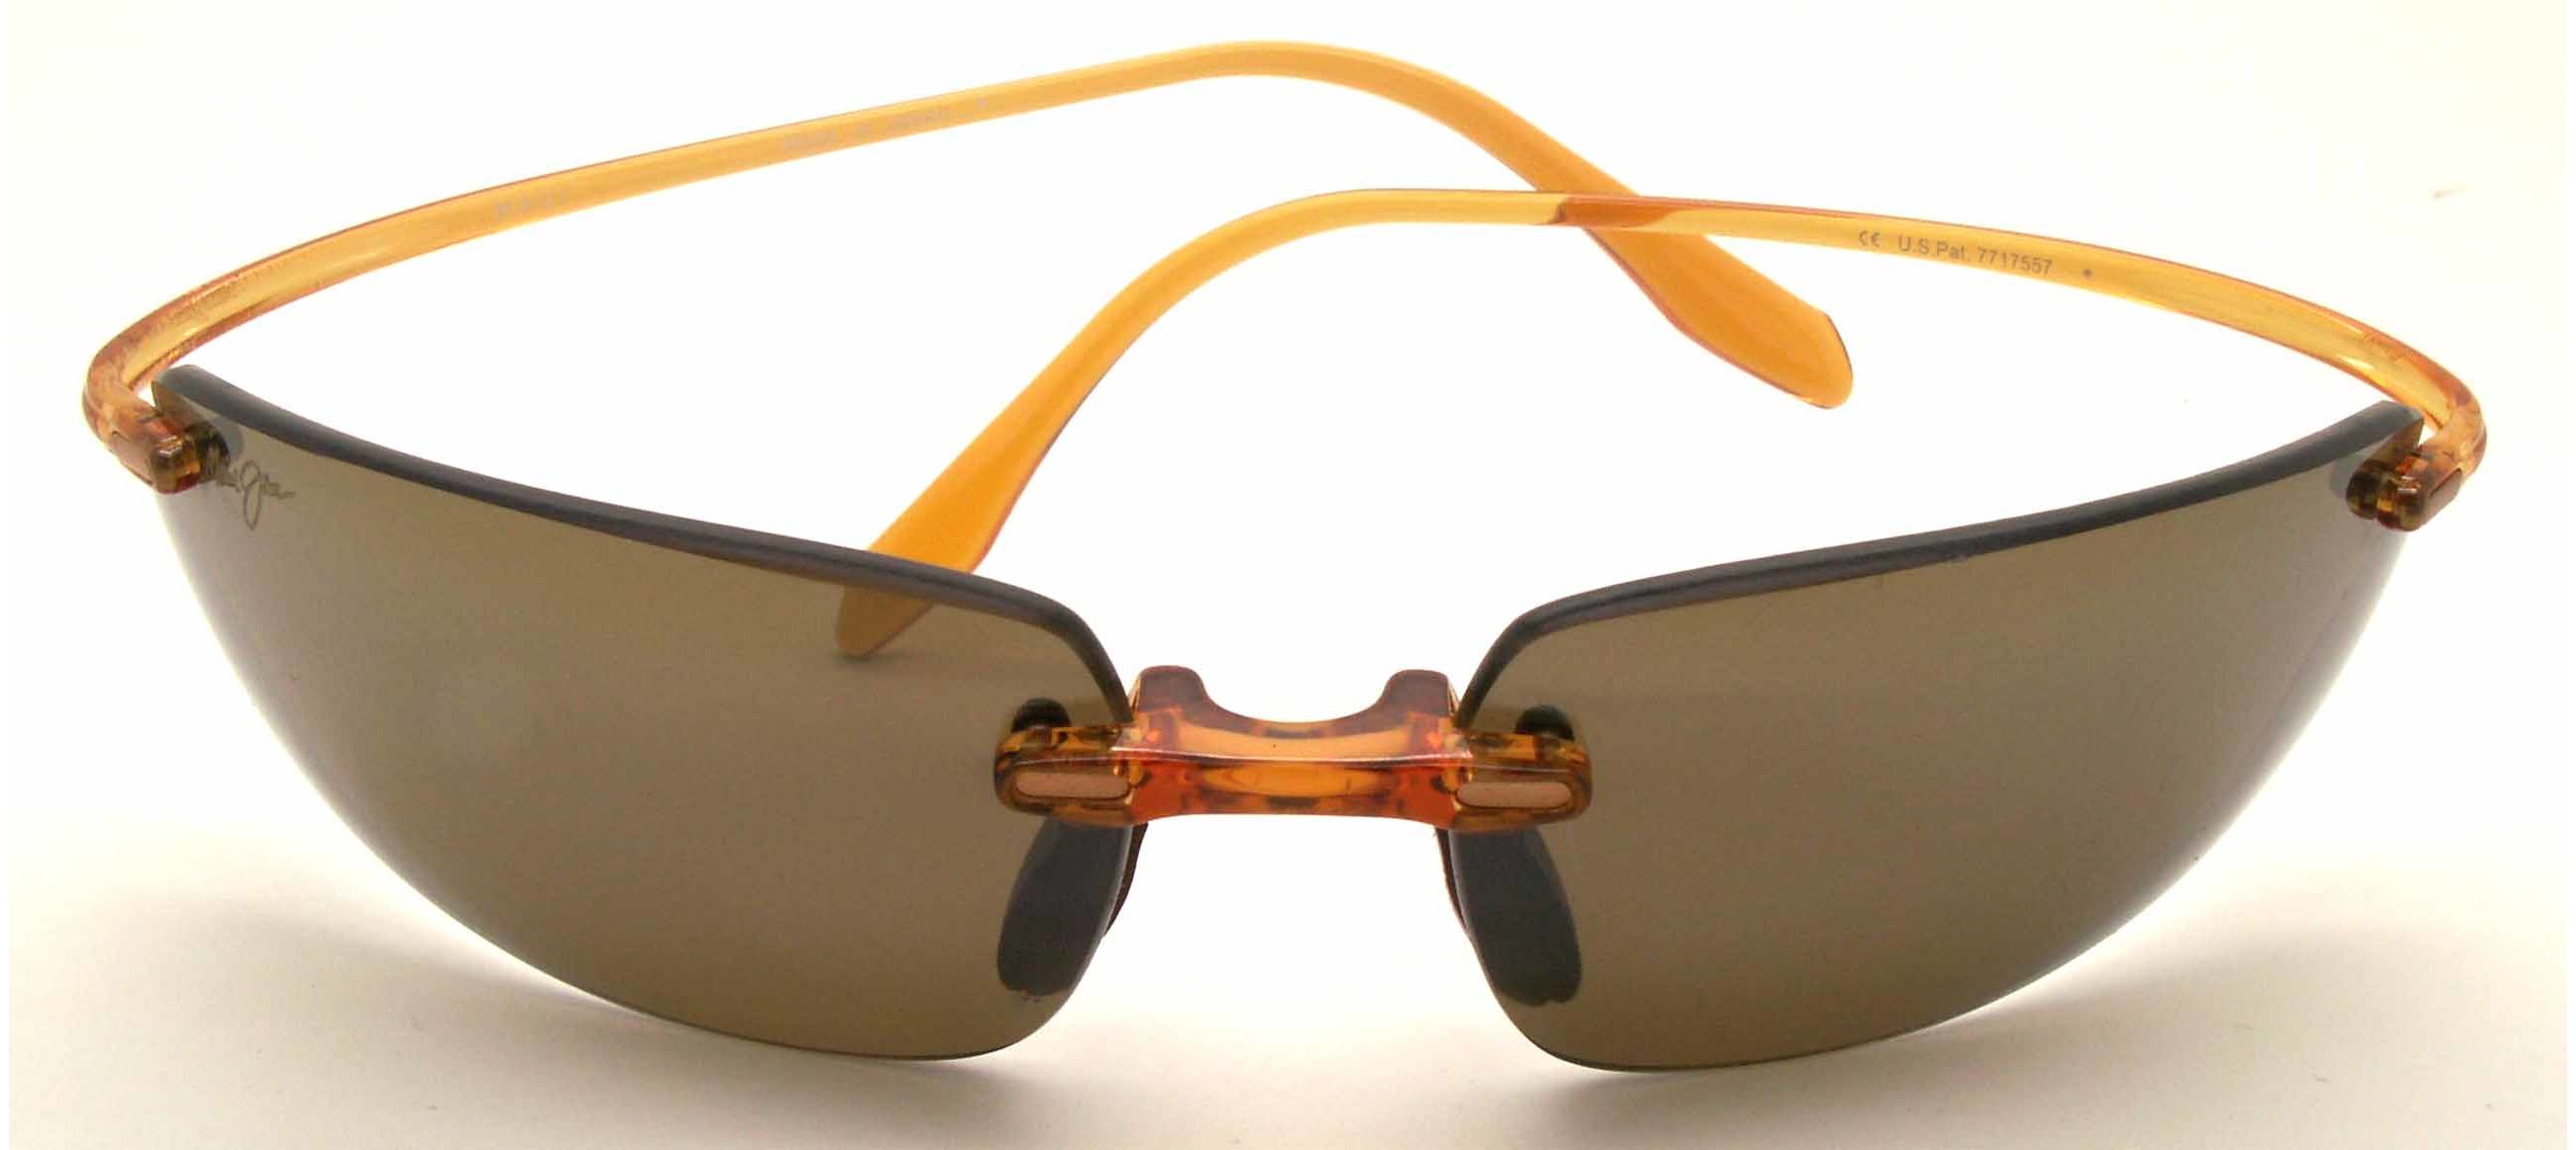 New Authentic Polarized  MAUI JIM HURRICANE  Sunglasses  Burgundy Frame  R578-07 